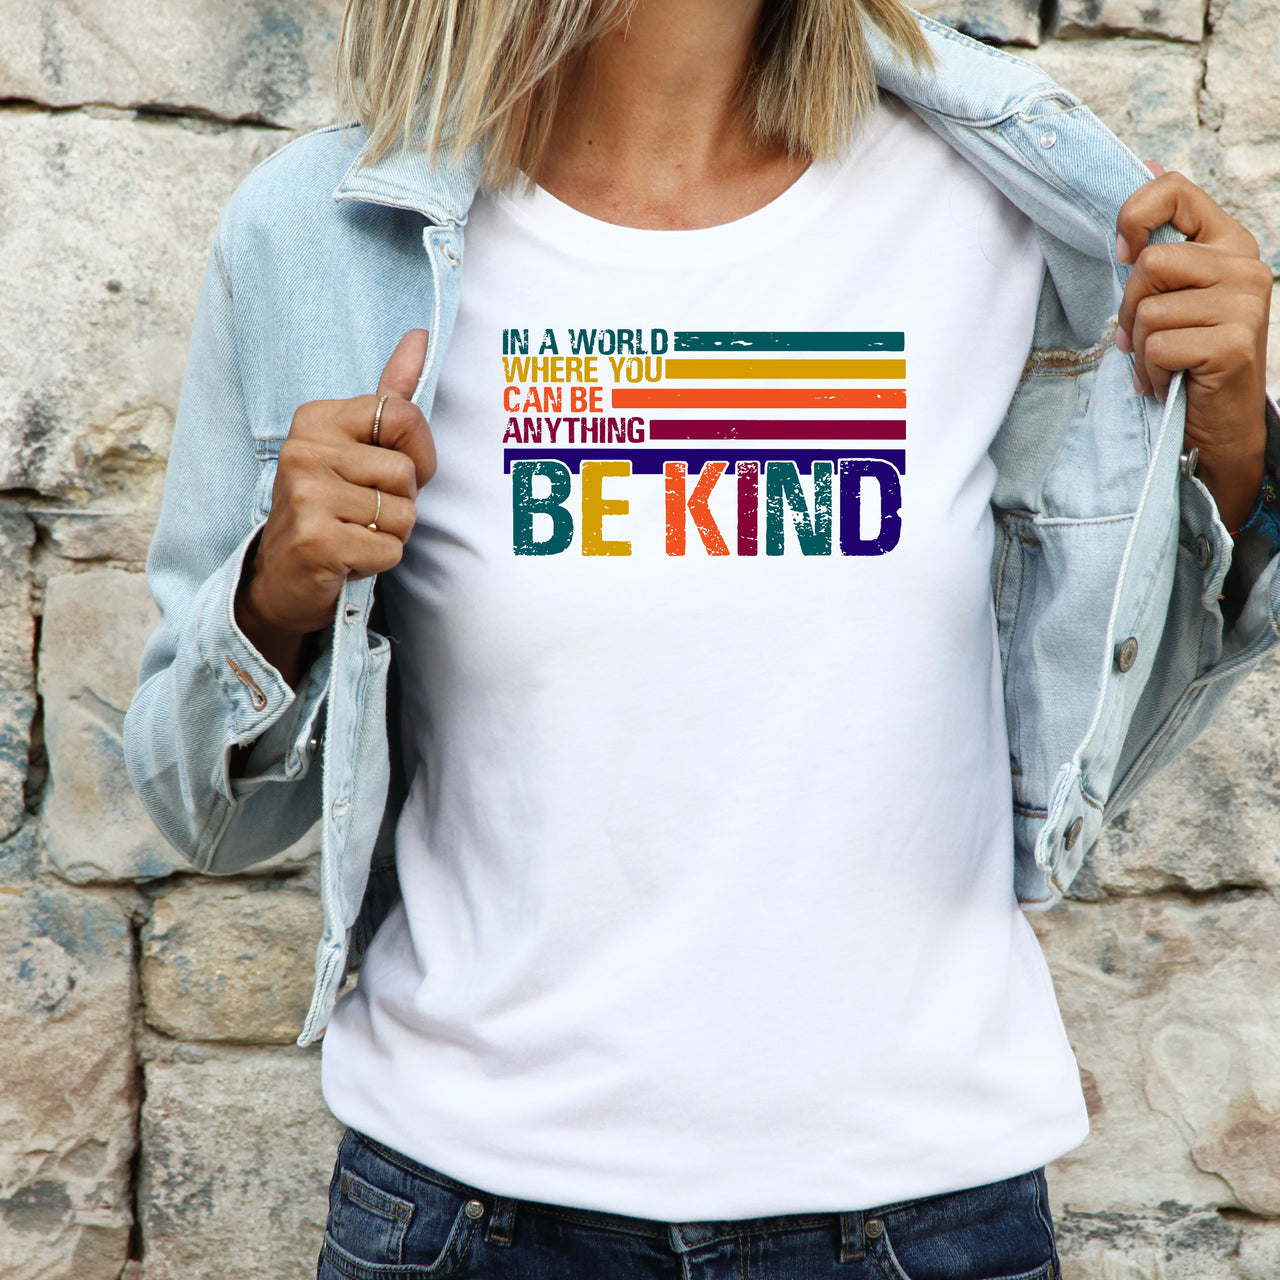 Be Kind (6 Apparel Options) - Bella & District Brands